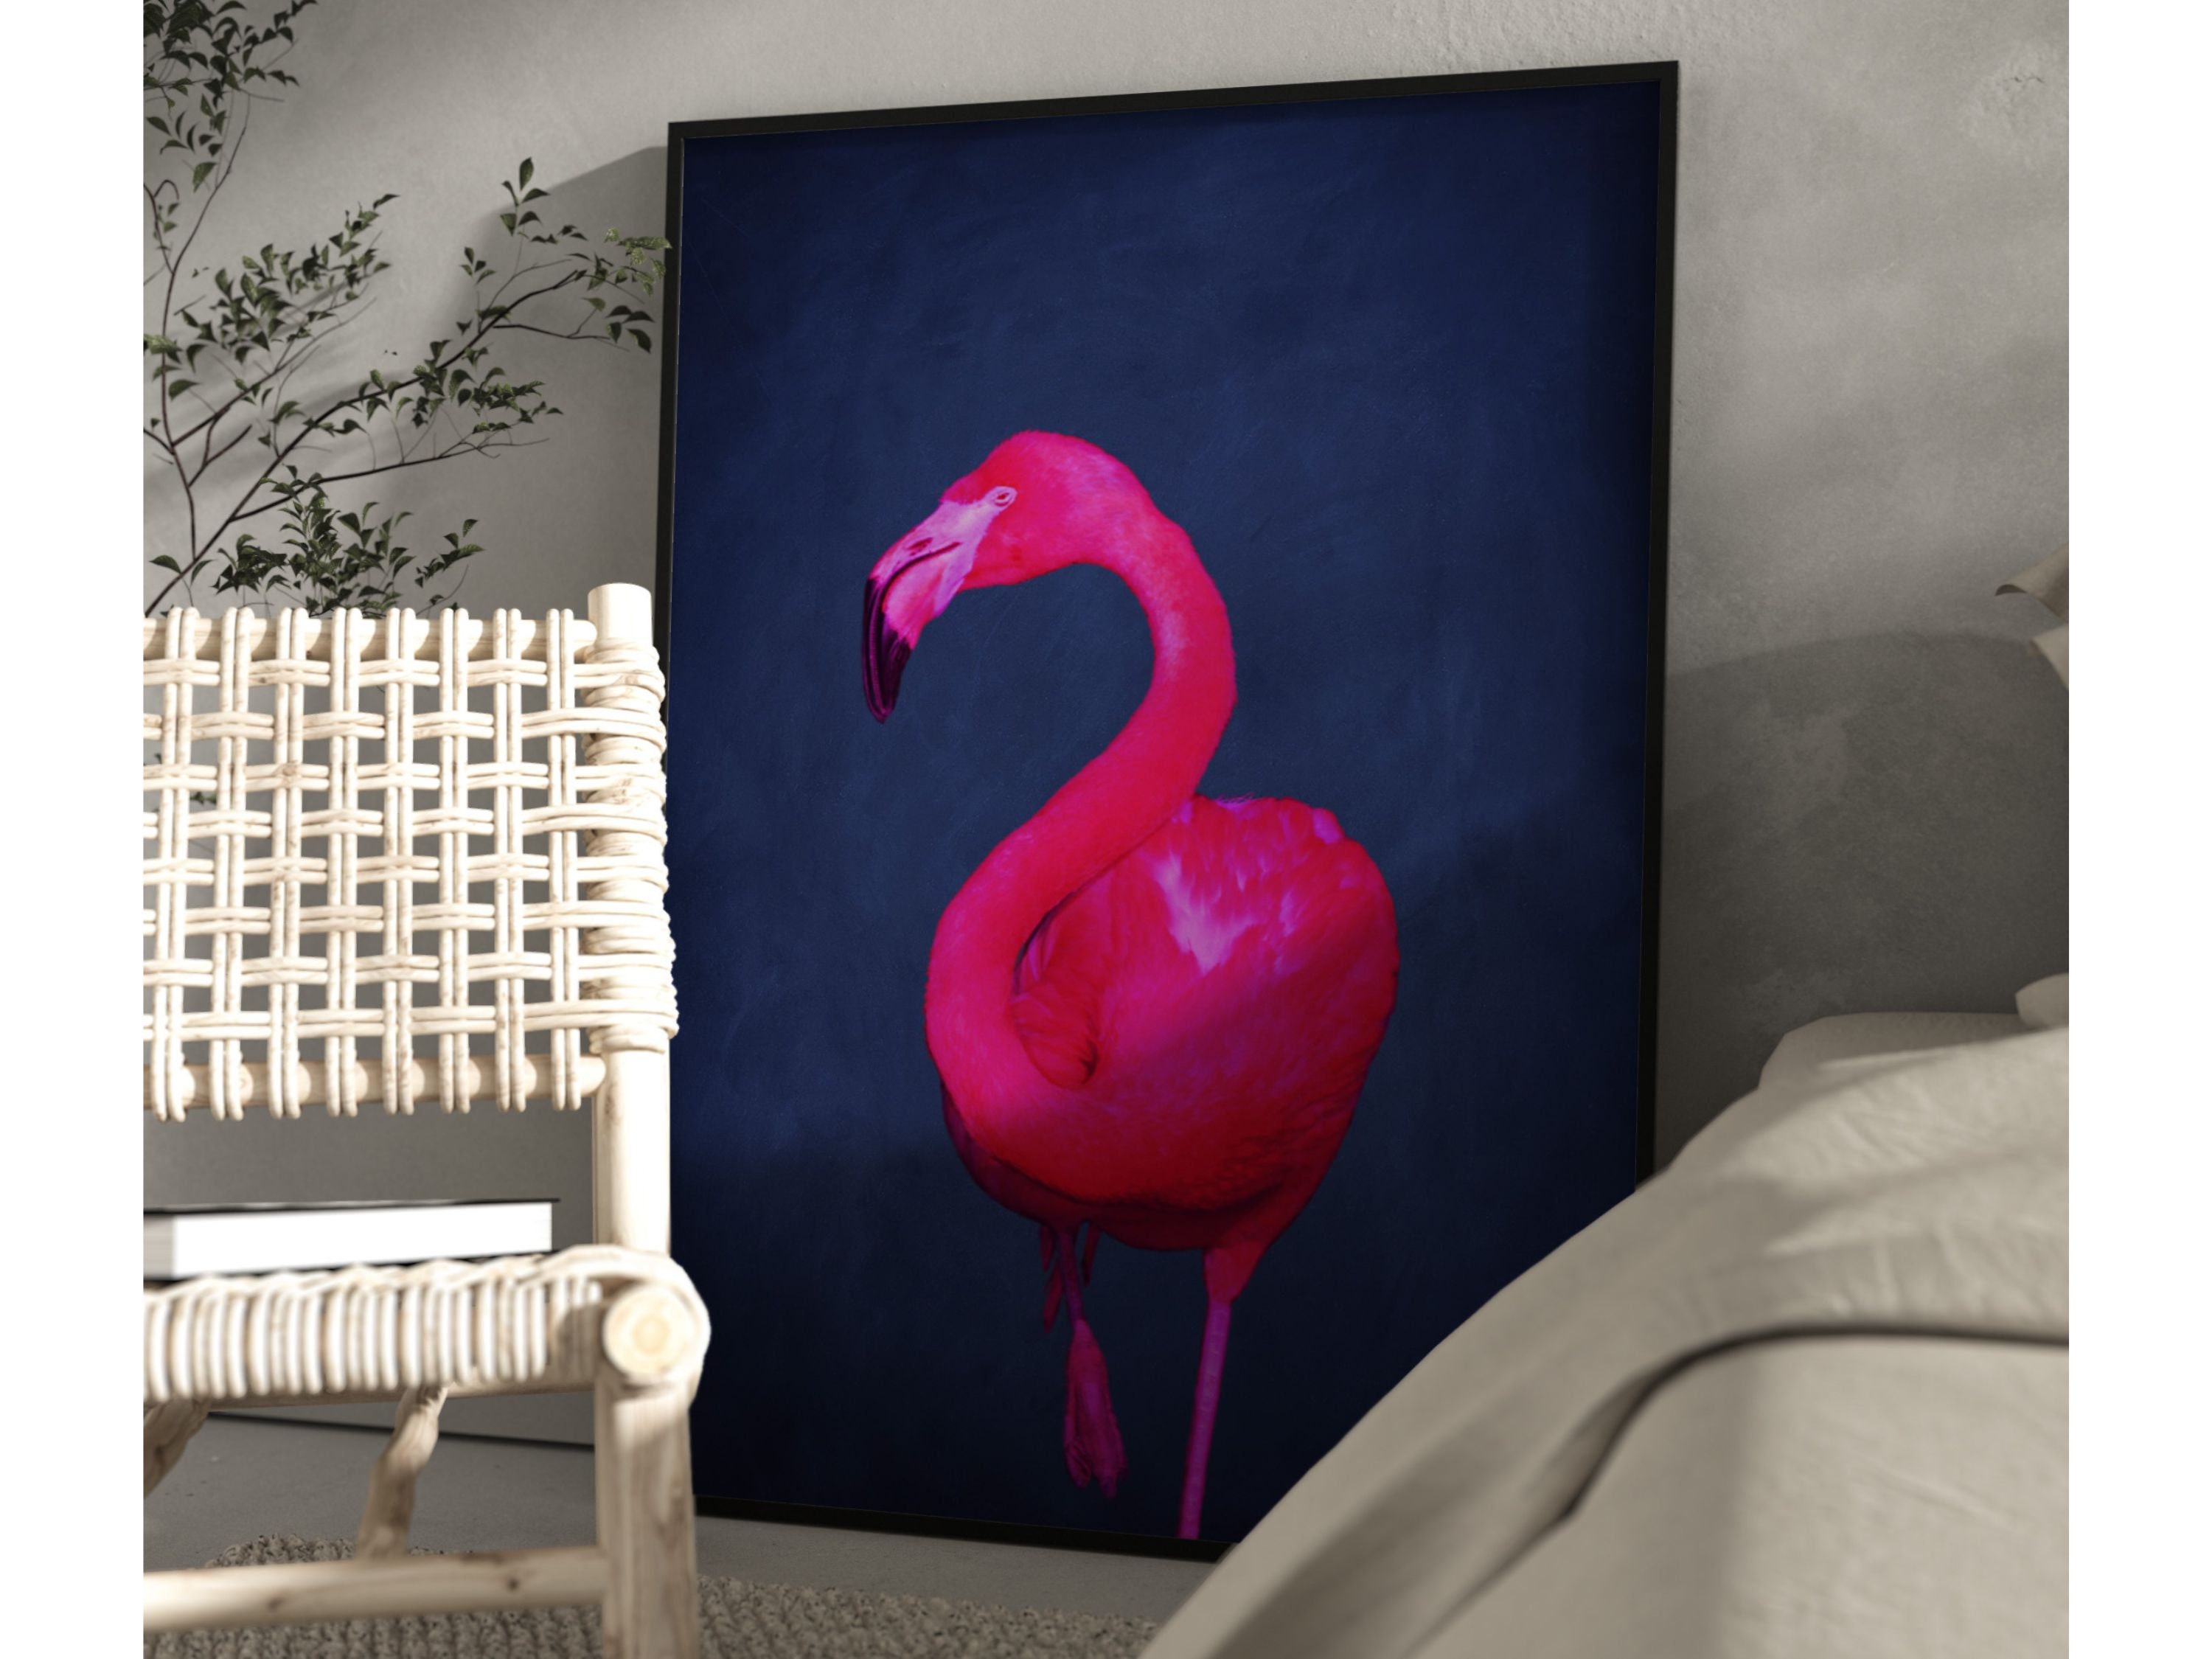 Indigo Bright Pink Decor, Living Room, Etsy Wall Pink Flamingo Wall Blue Art - Maximalist Decor, Flamingo Poster, Print Eclectic Large Neon Art